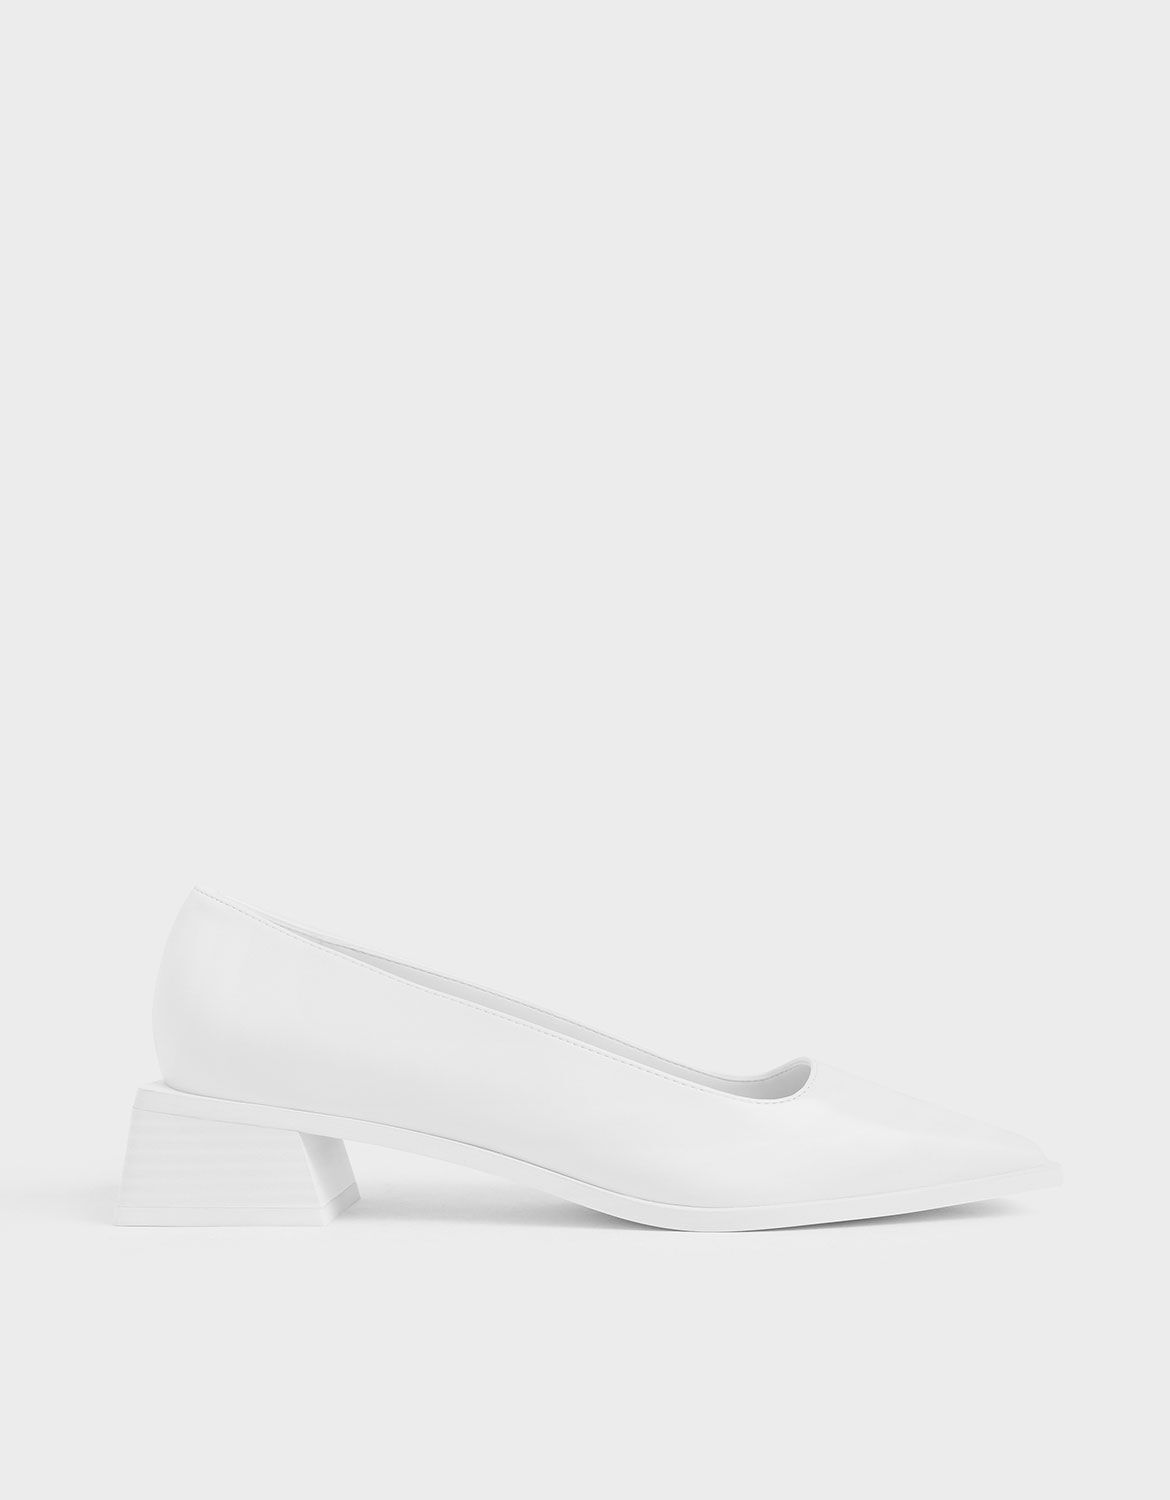 square toe white heels